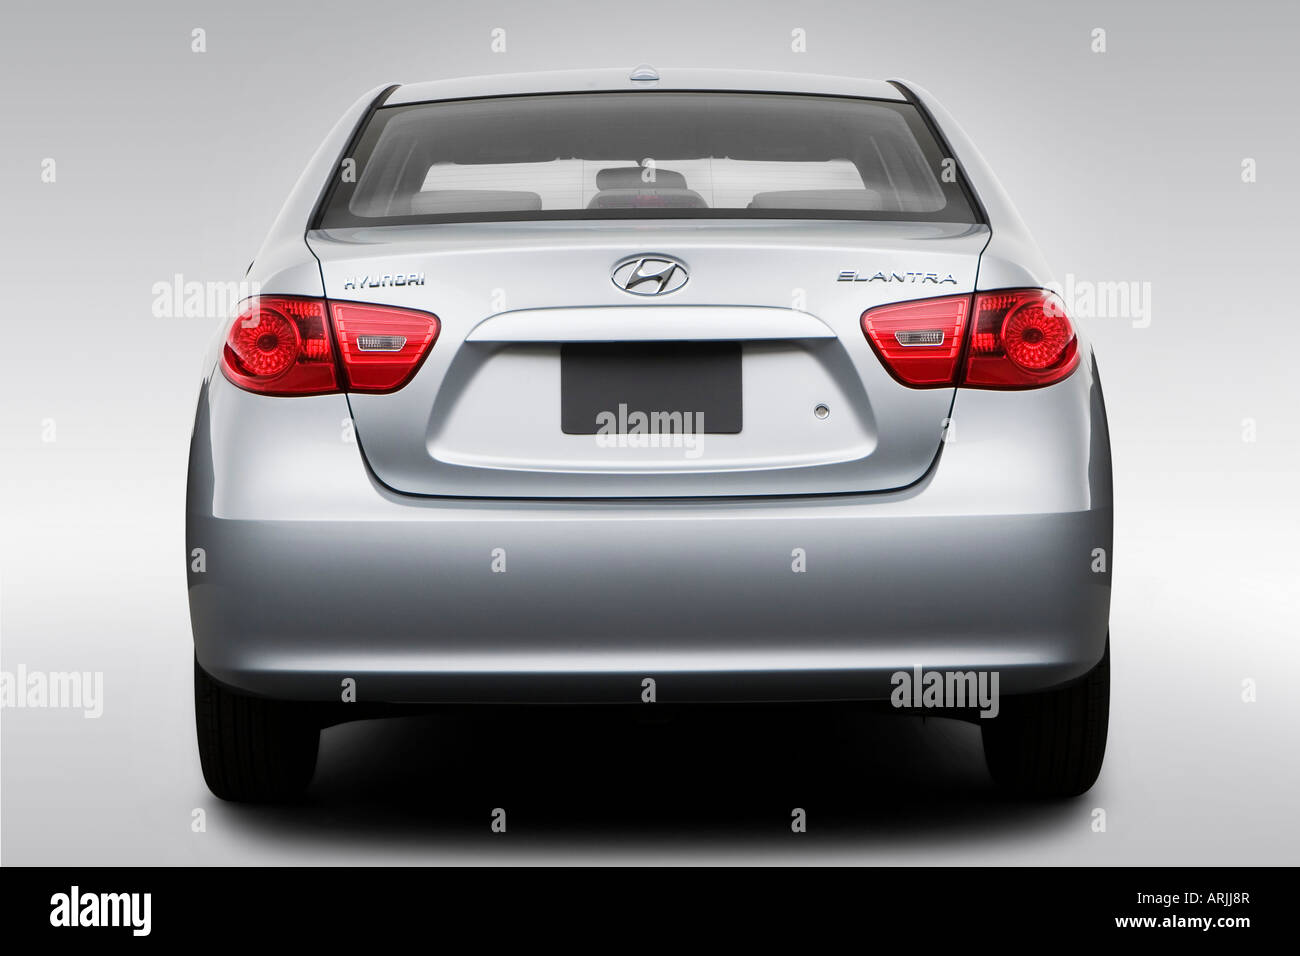 2008 Hyundai Elantra GLS in Silver - Low/Wide Rear Stock Photo - Alamy